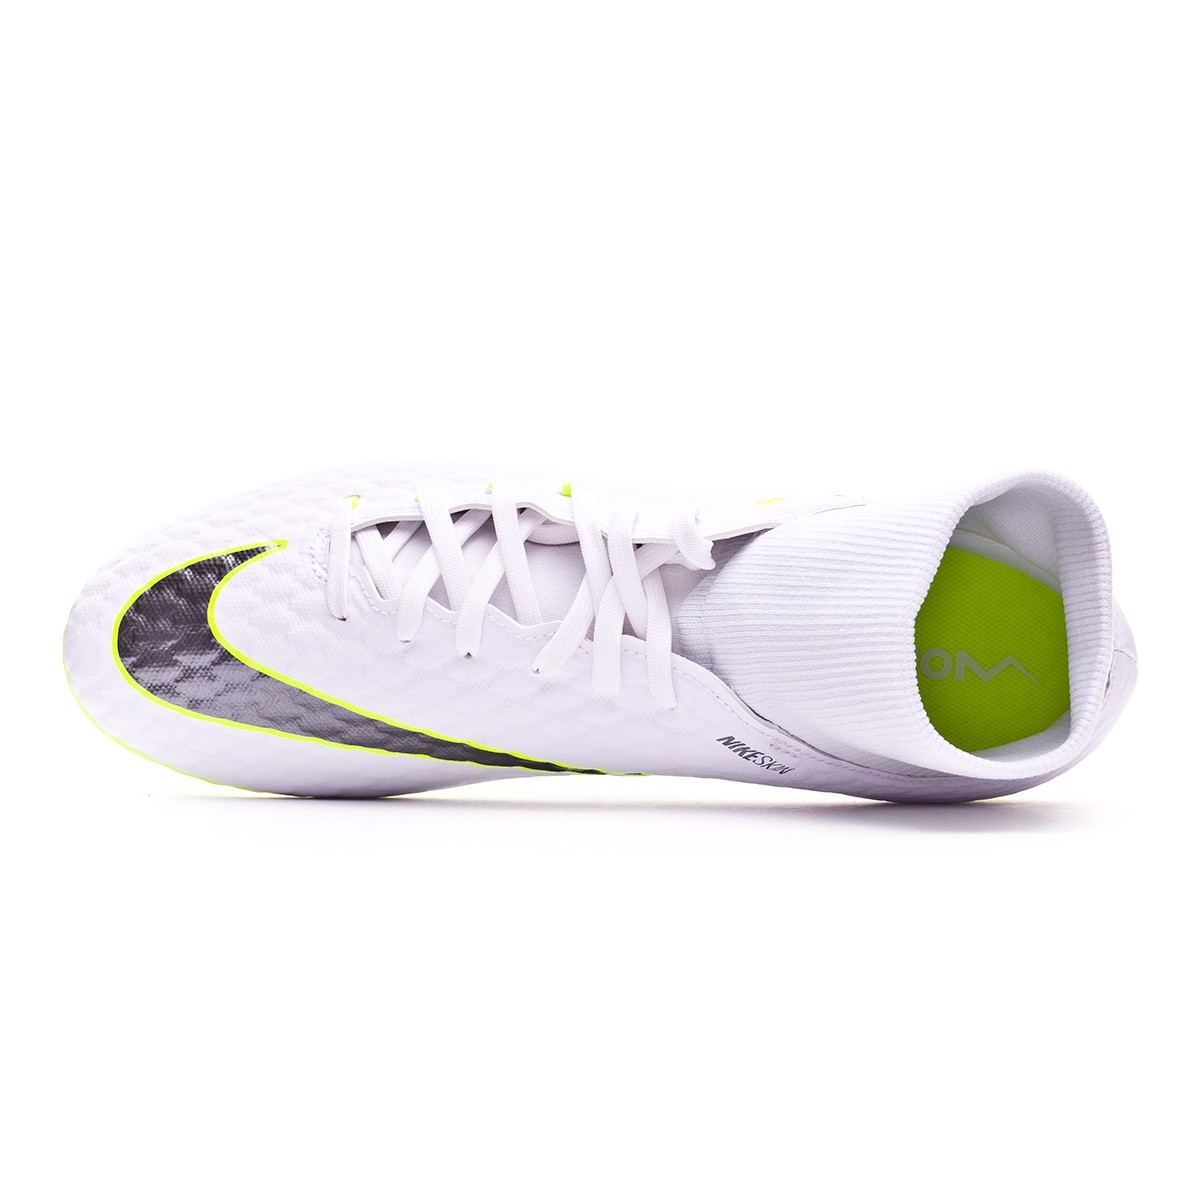 Nike Men's Hypervenom 3 Academy FG Soccer Cleats